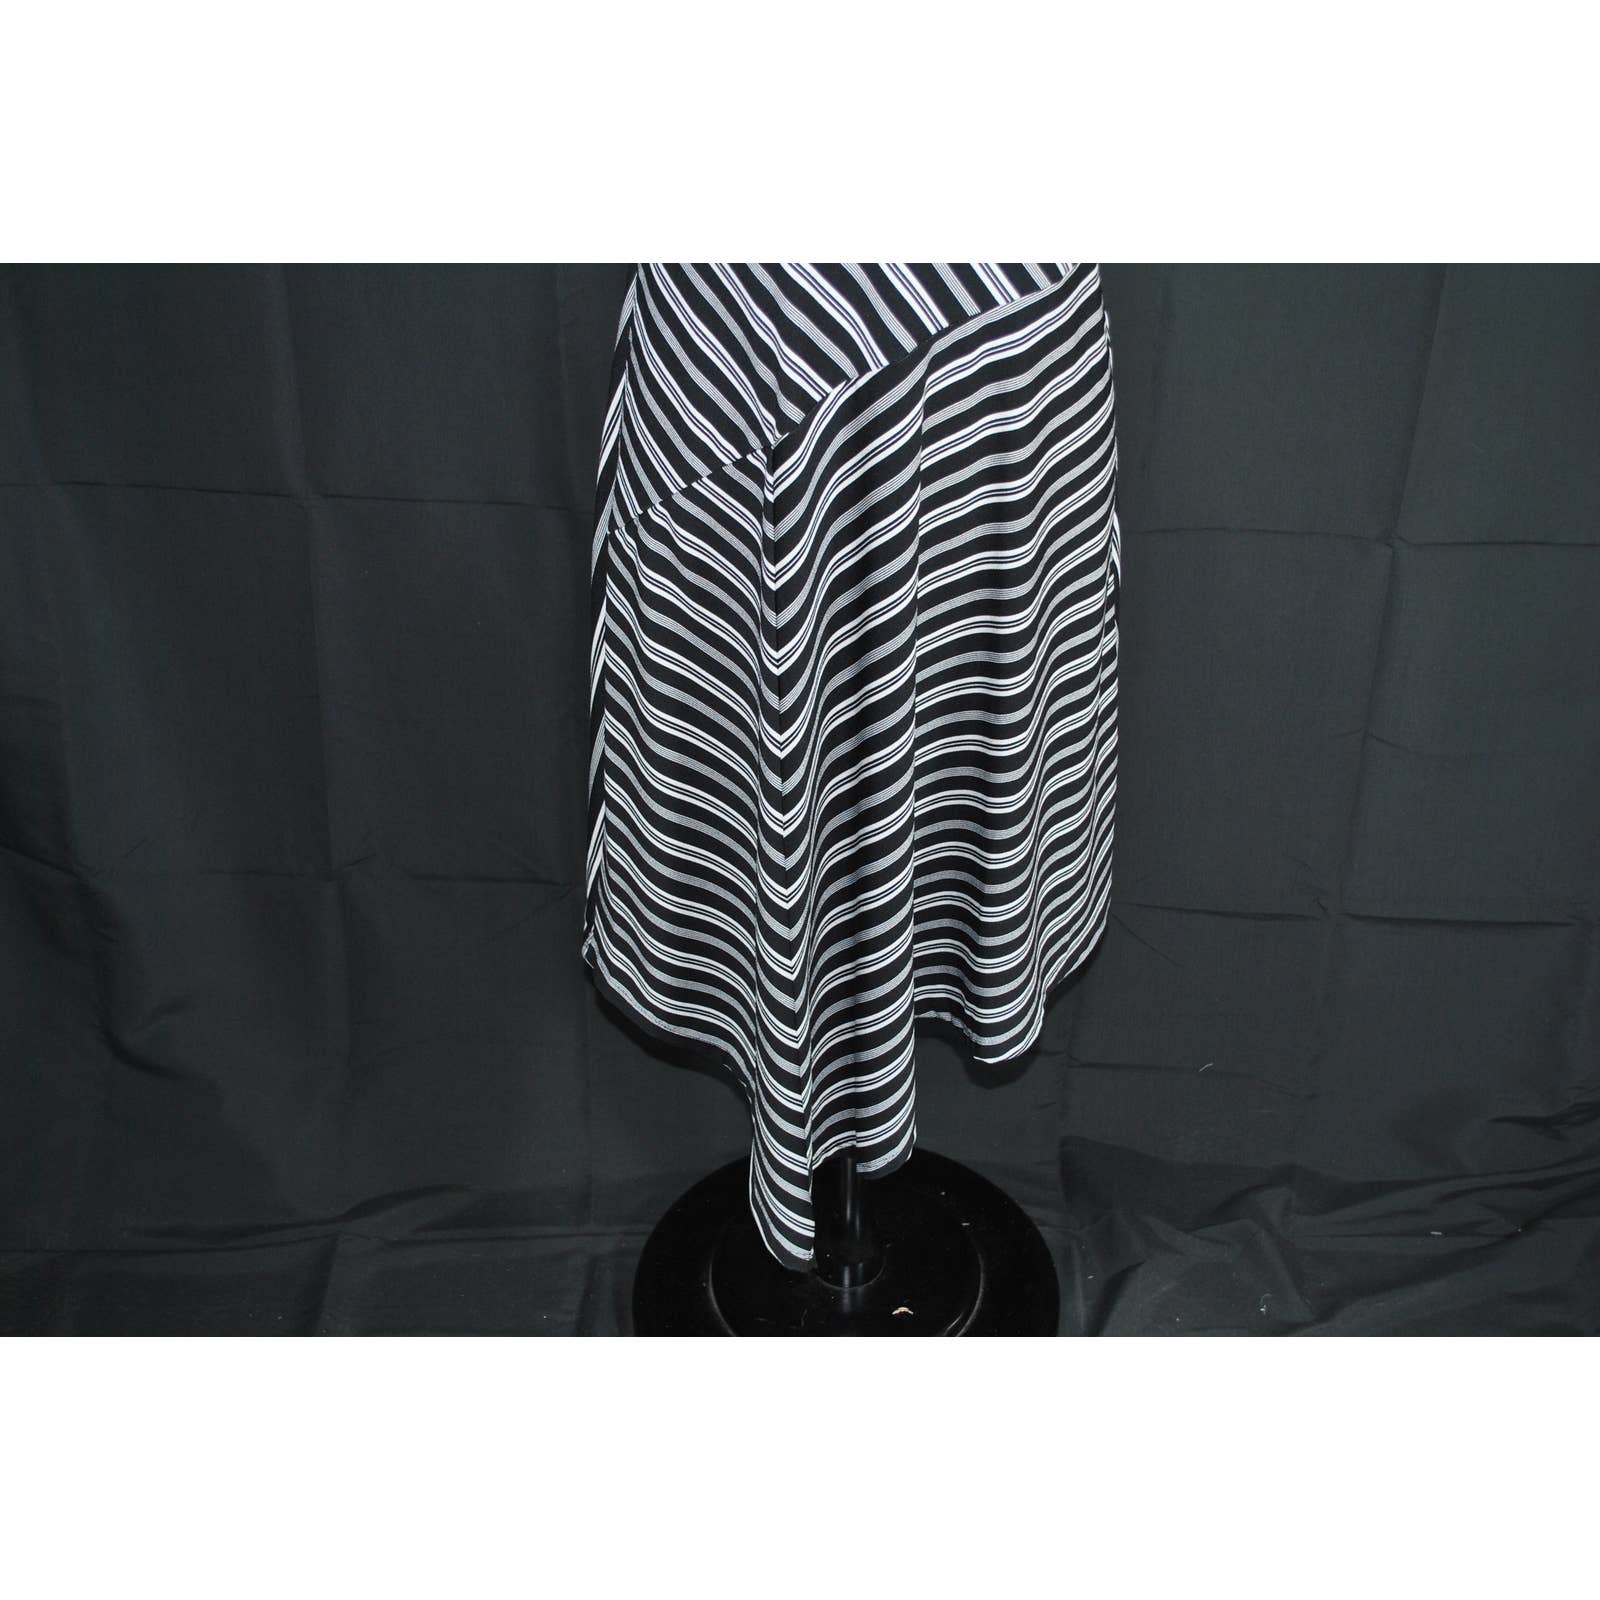 NWT Banana Republic Black and White Striped Dress - S